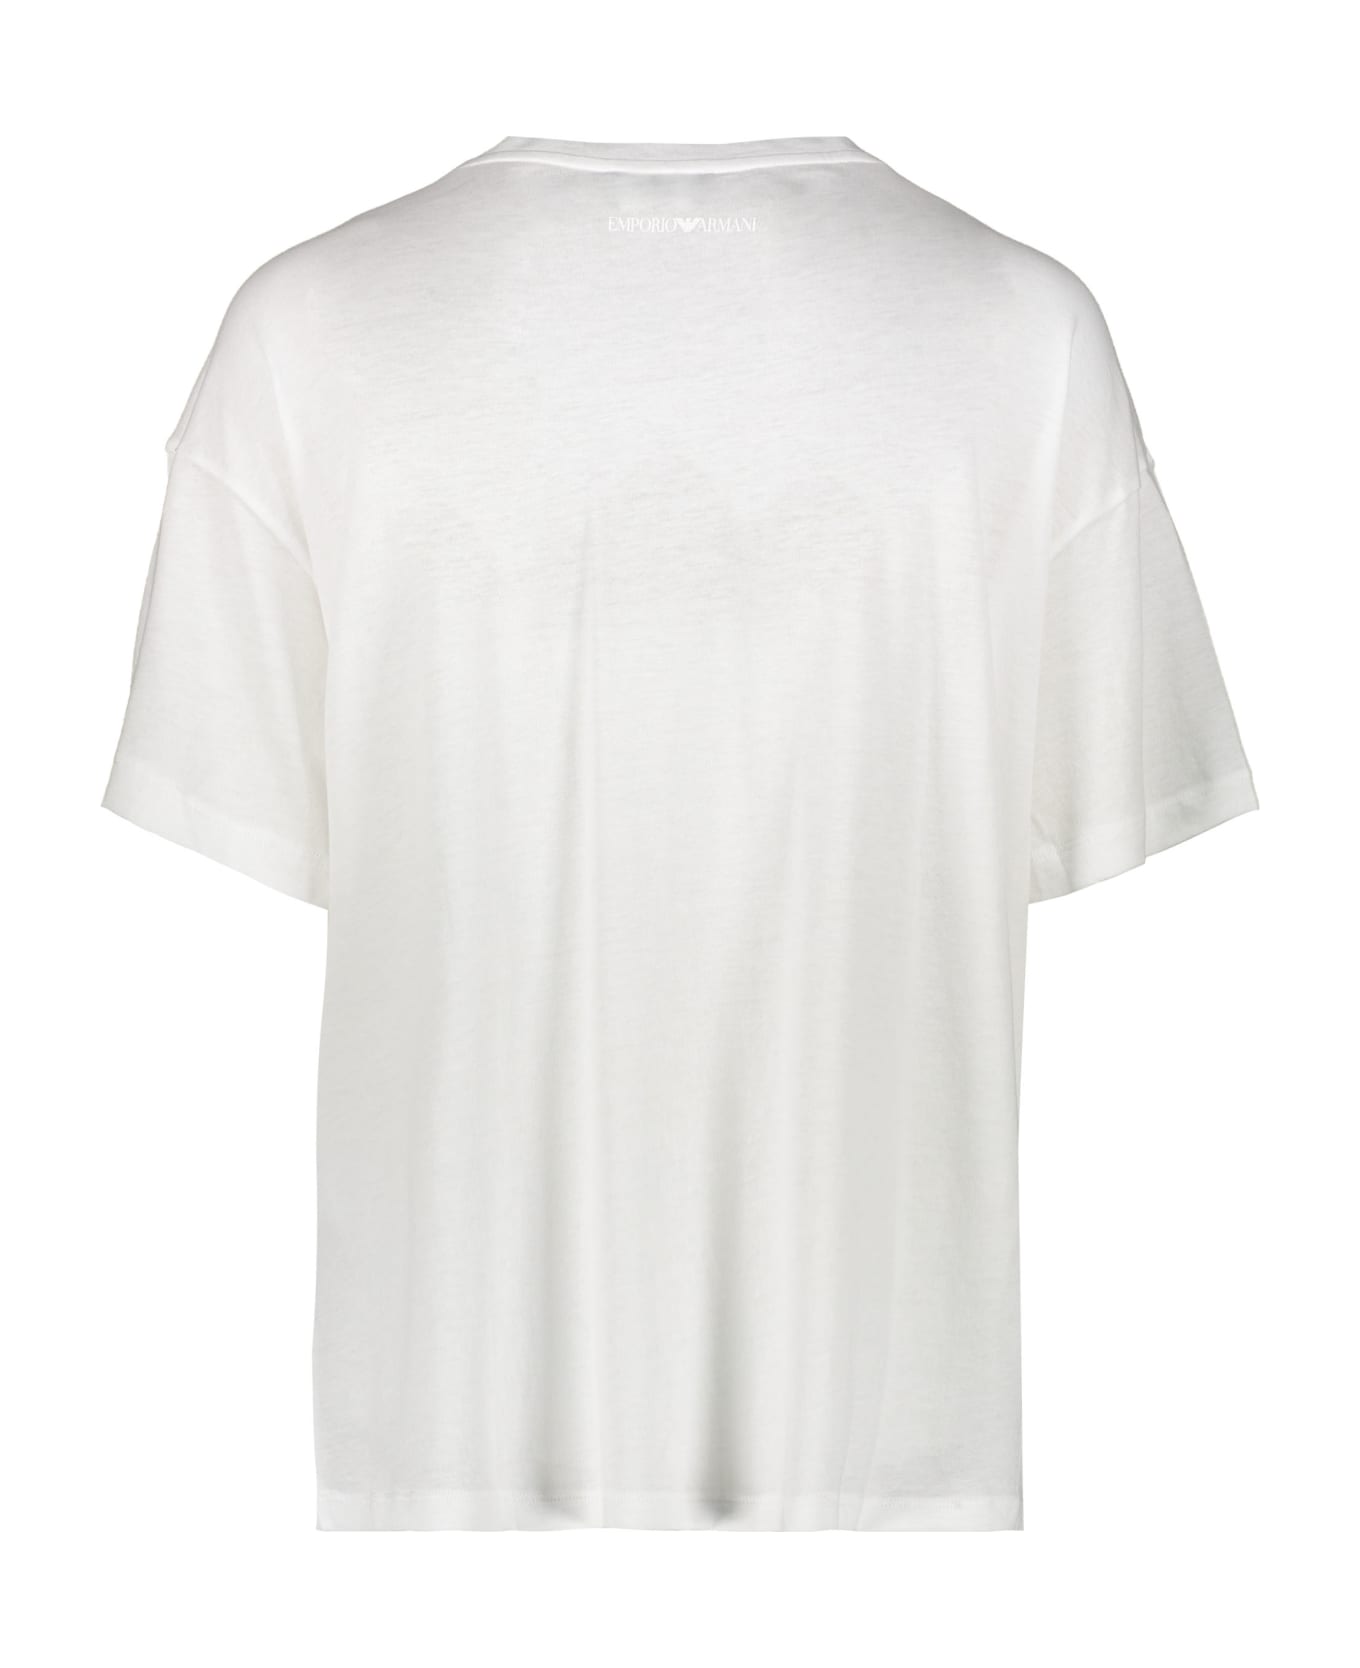 Emporio Armani Printed T-shirt - White Tシャツ